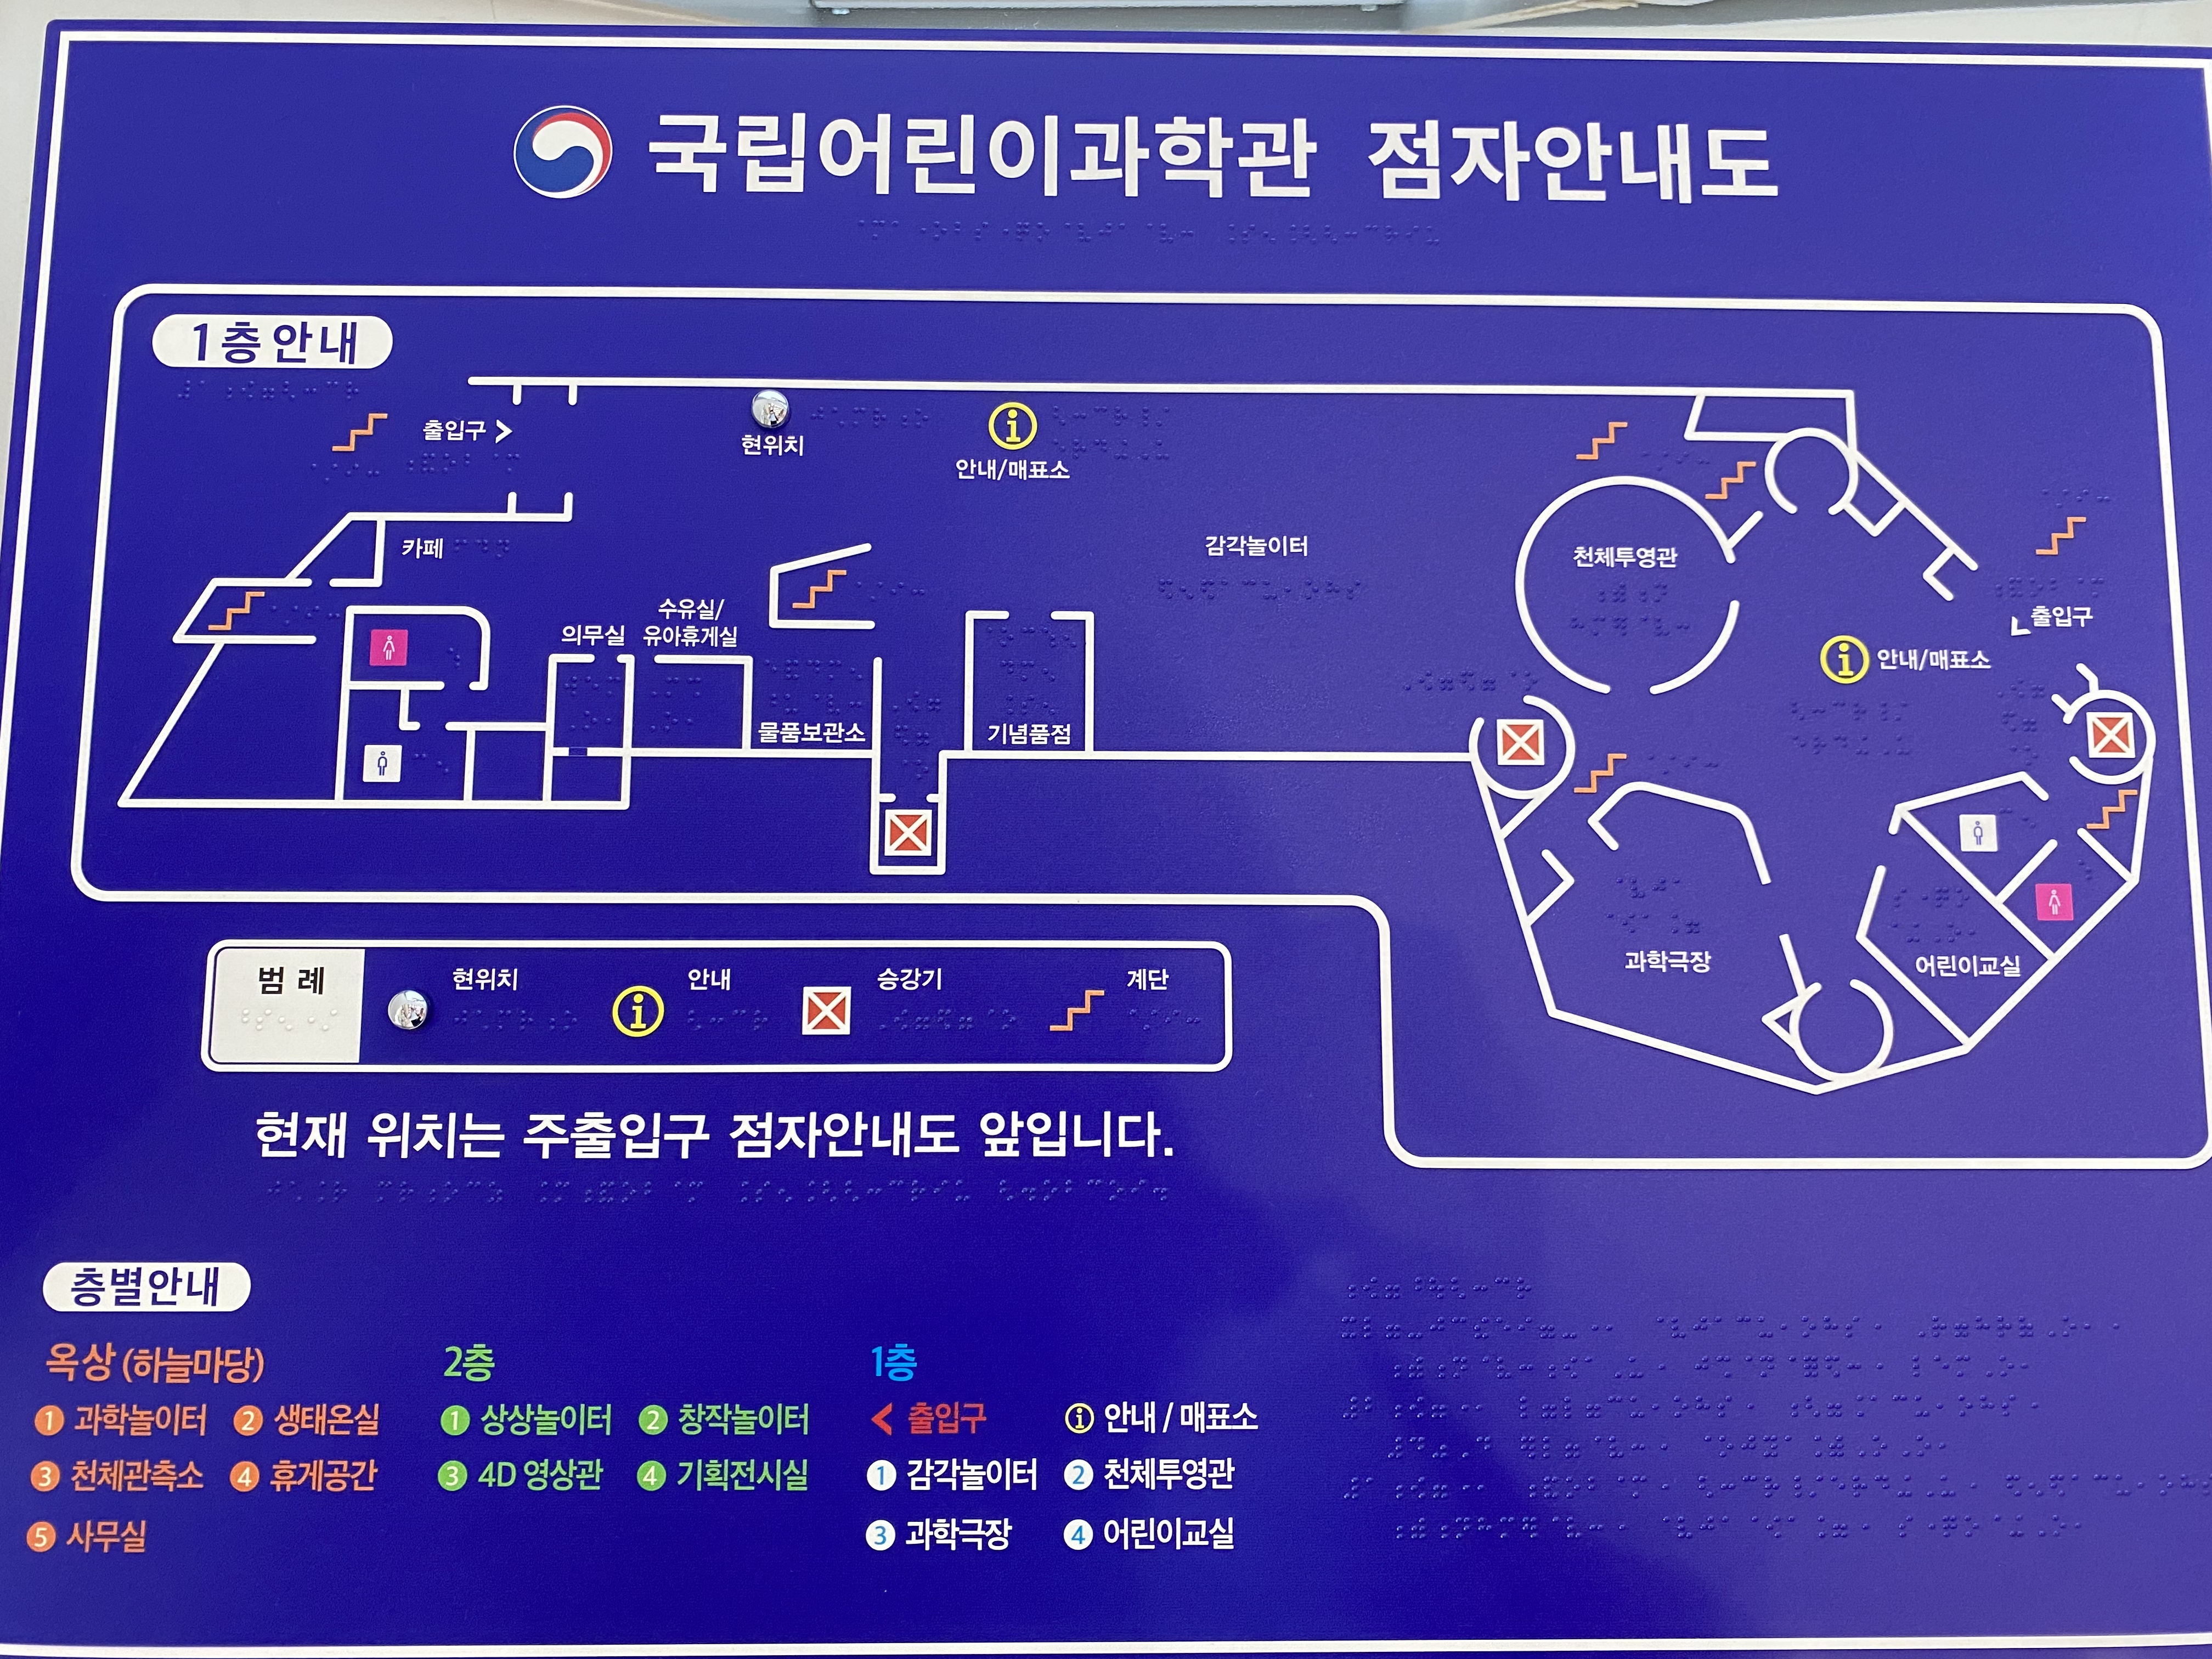 Korean Braille guide map and information desk0 : Guide map of Children's Science Center that provides Korean braille description